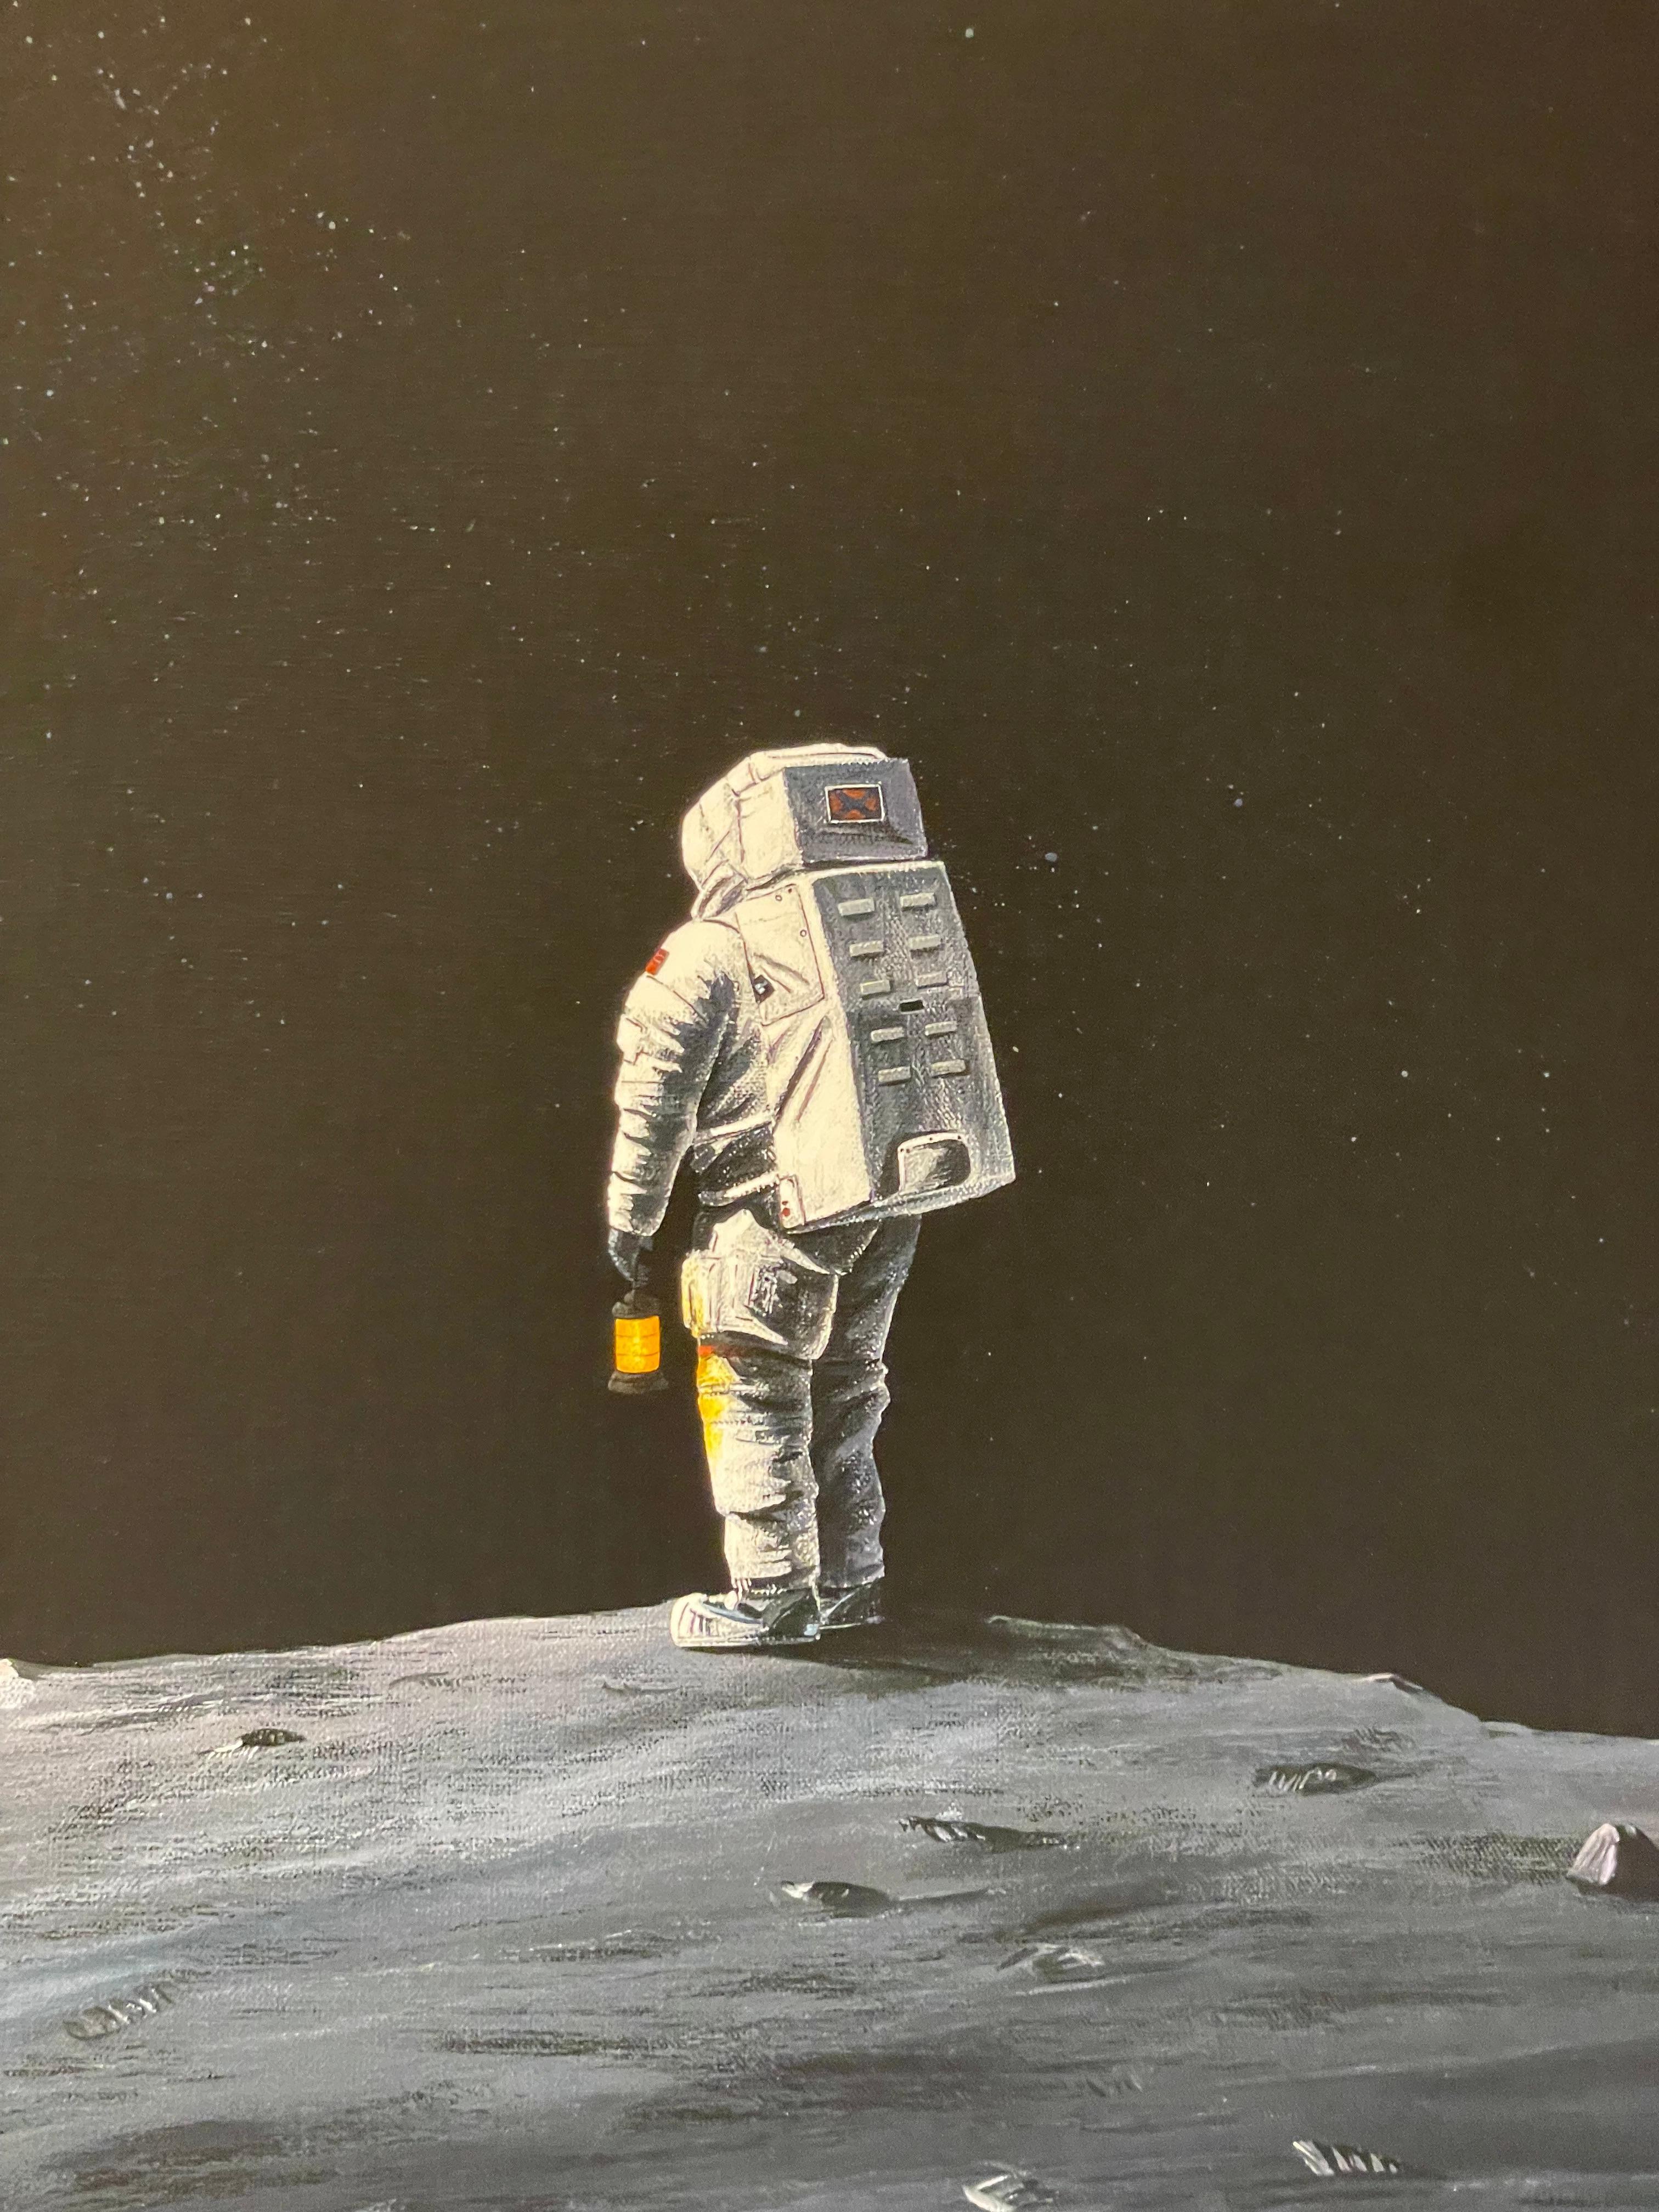 Jing Zhiyong „A Beacon“ Zeitgenössische Kunst Astronauten-Serie – Print von Zhiyong Jing